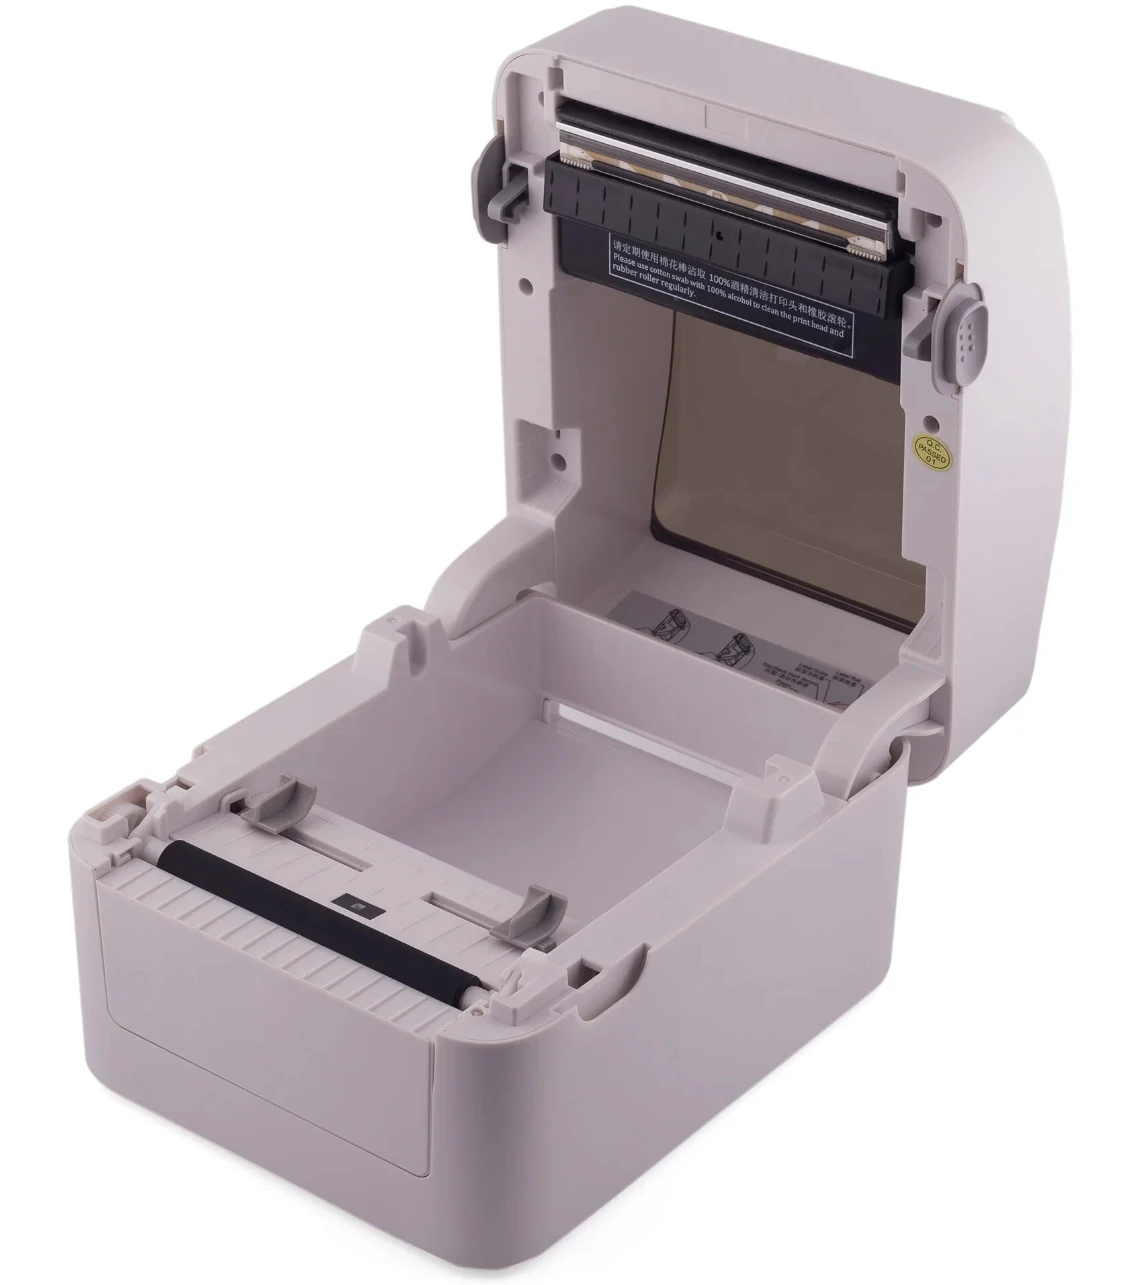 Этикеток xprinter xp 420b. Термопринтер XP 420b. Термопринтер Xprinter XP-420b. Термопринтер Xprinter 420b. Термопринтер Xprinter XP-420b белый.